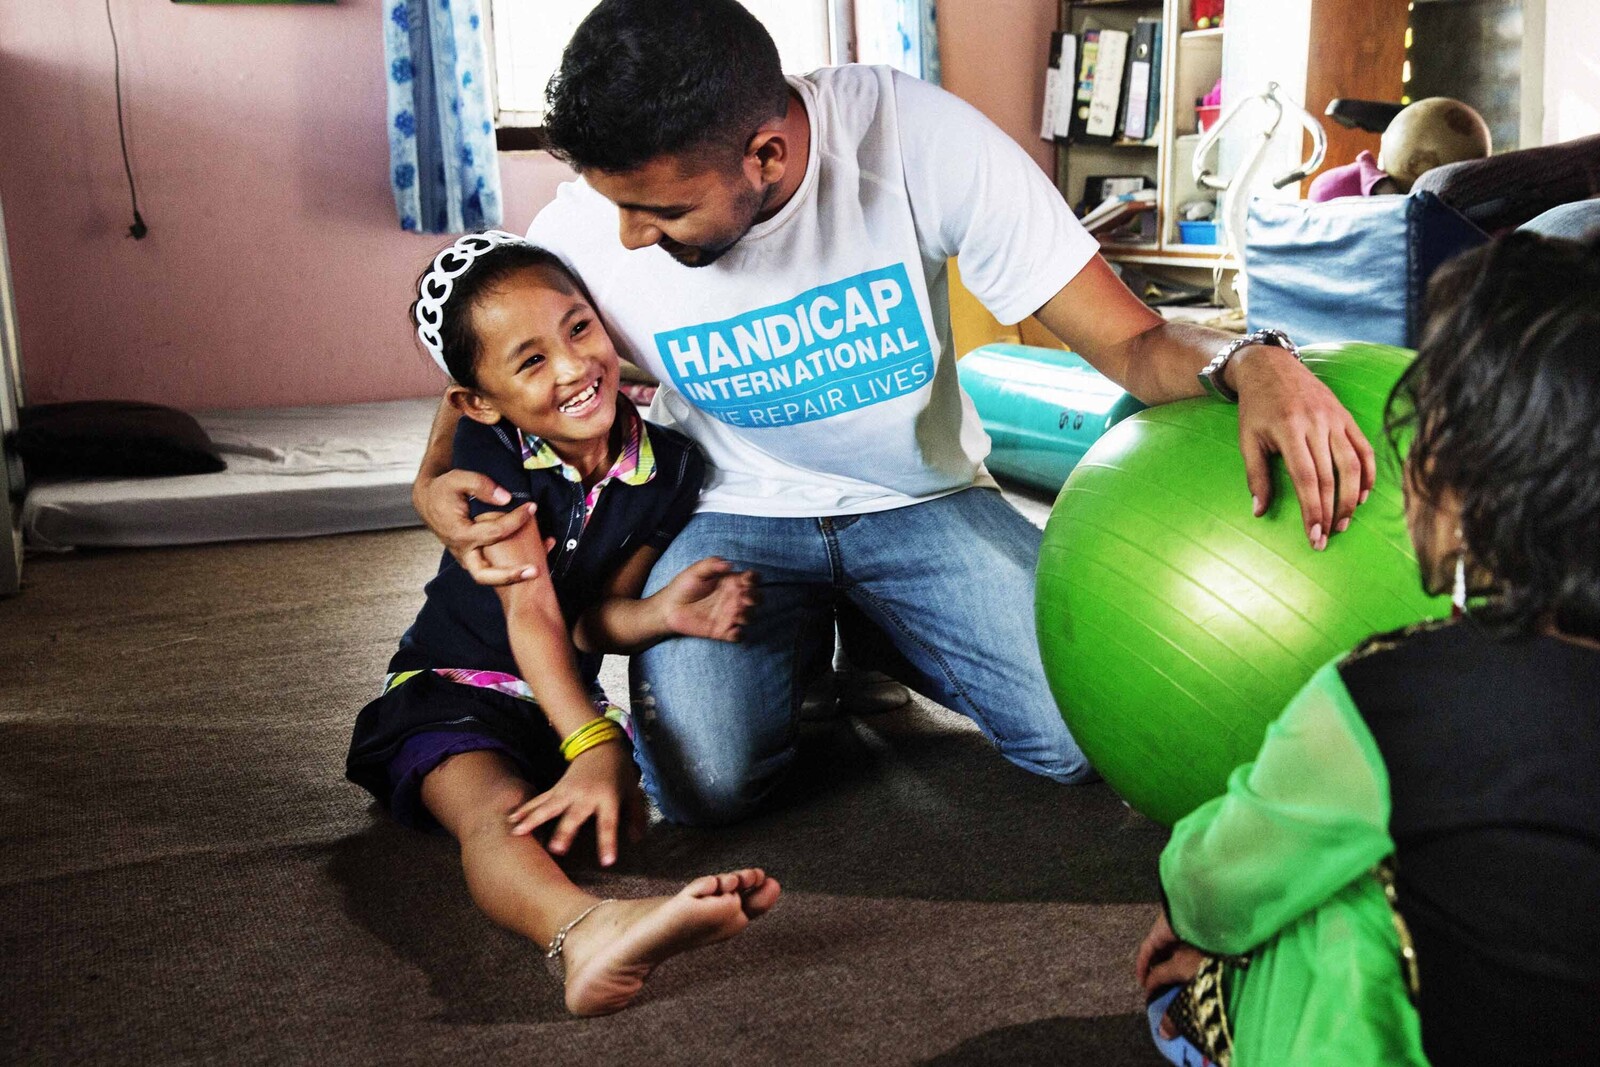 Erdbeben Nepal Prothese Kind Therapie Heilung